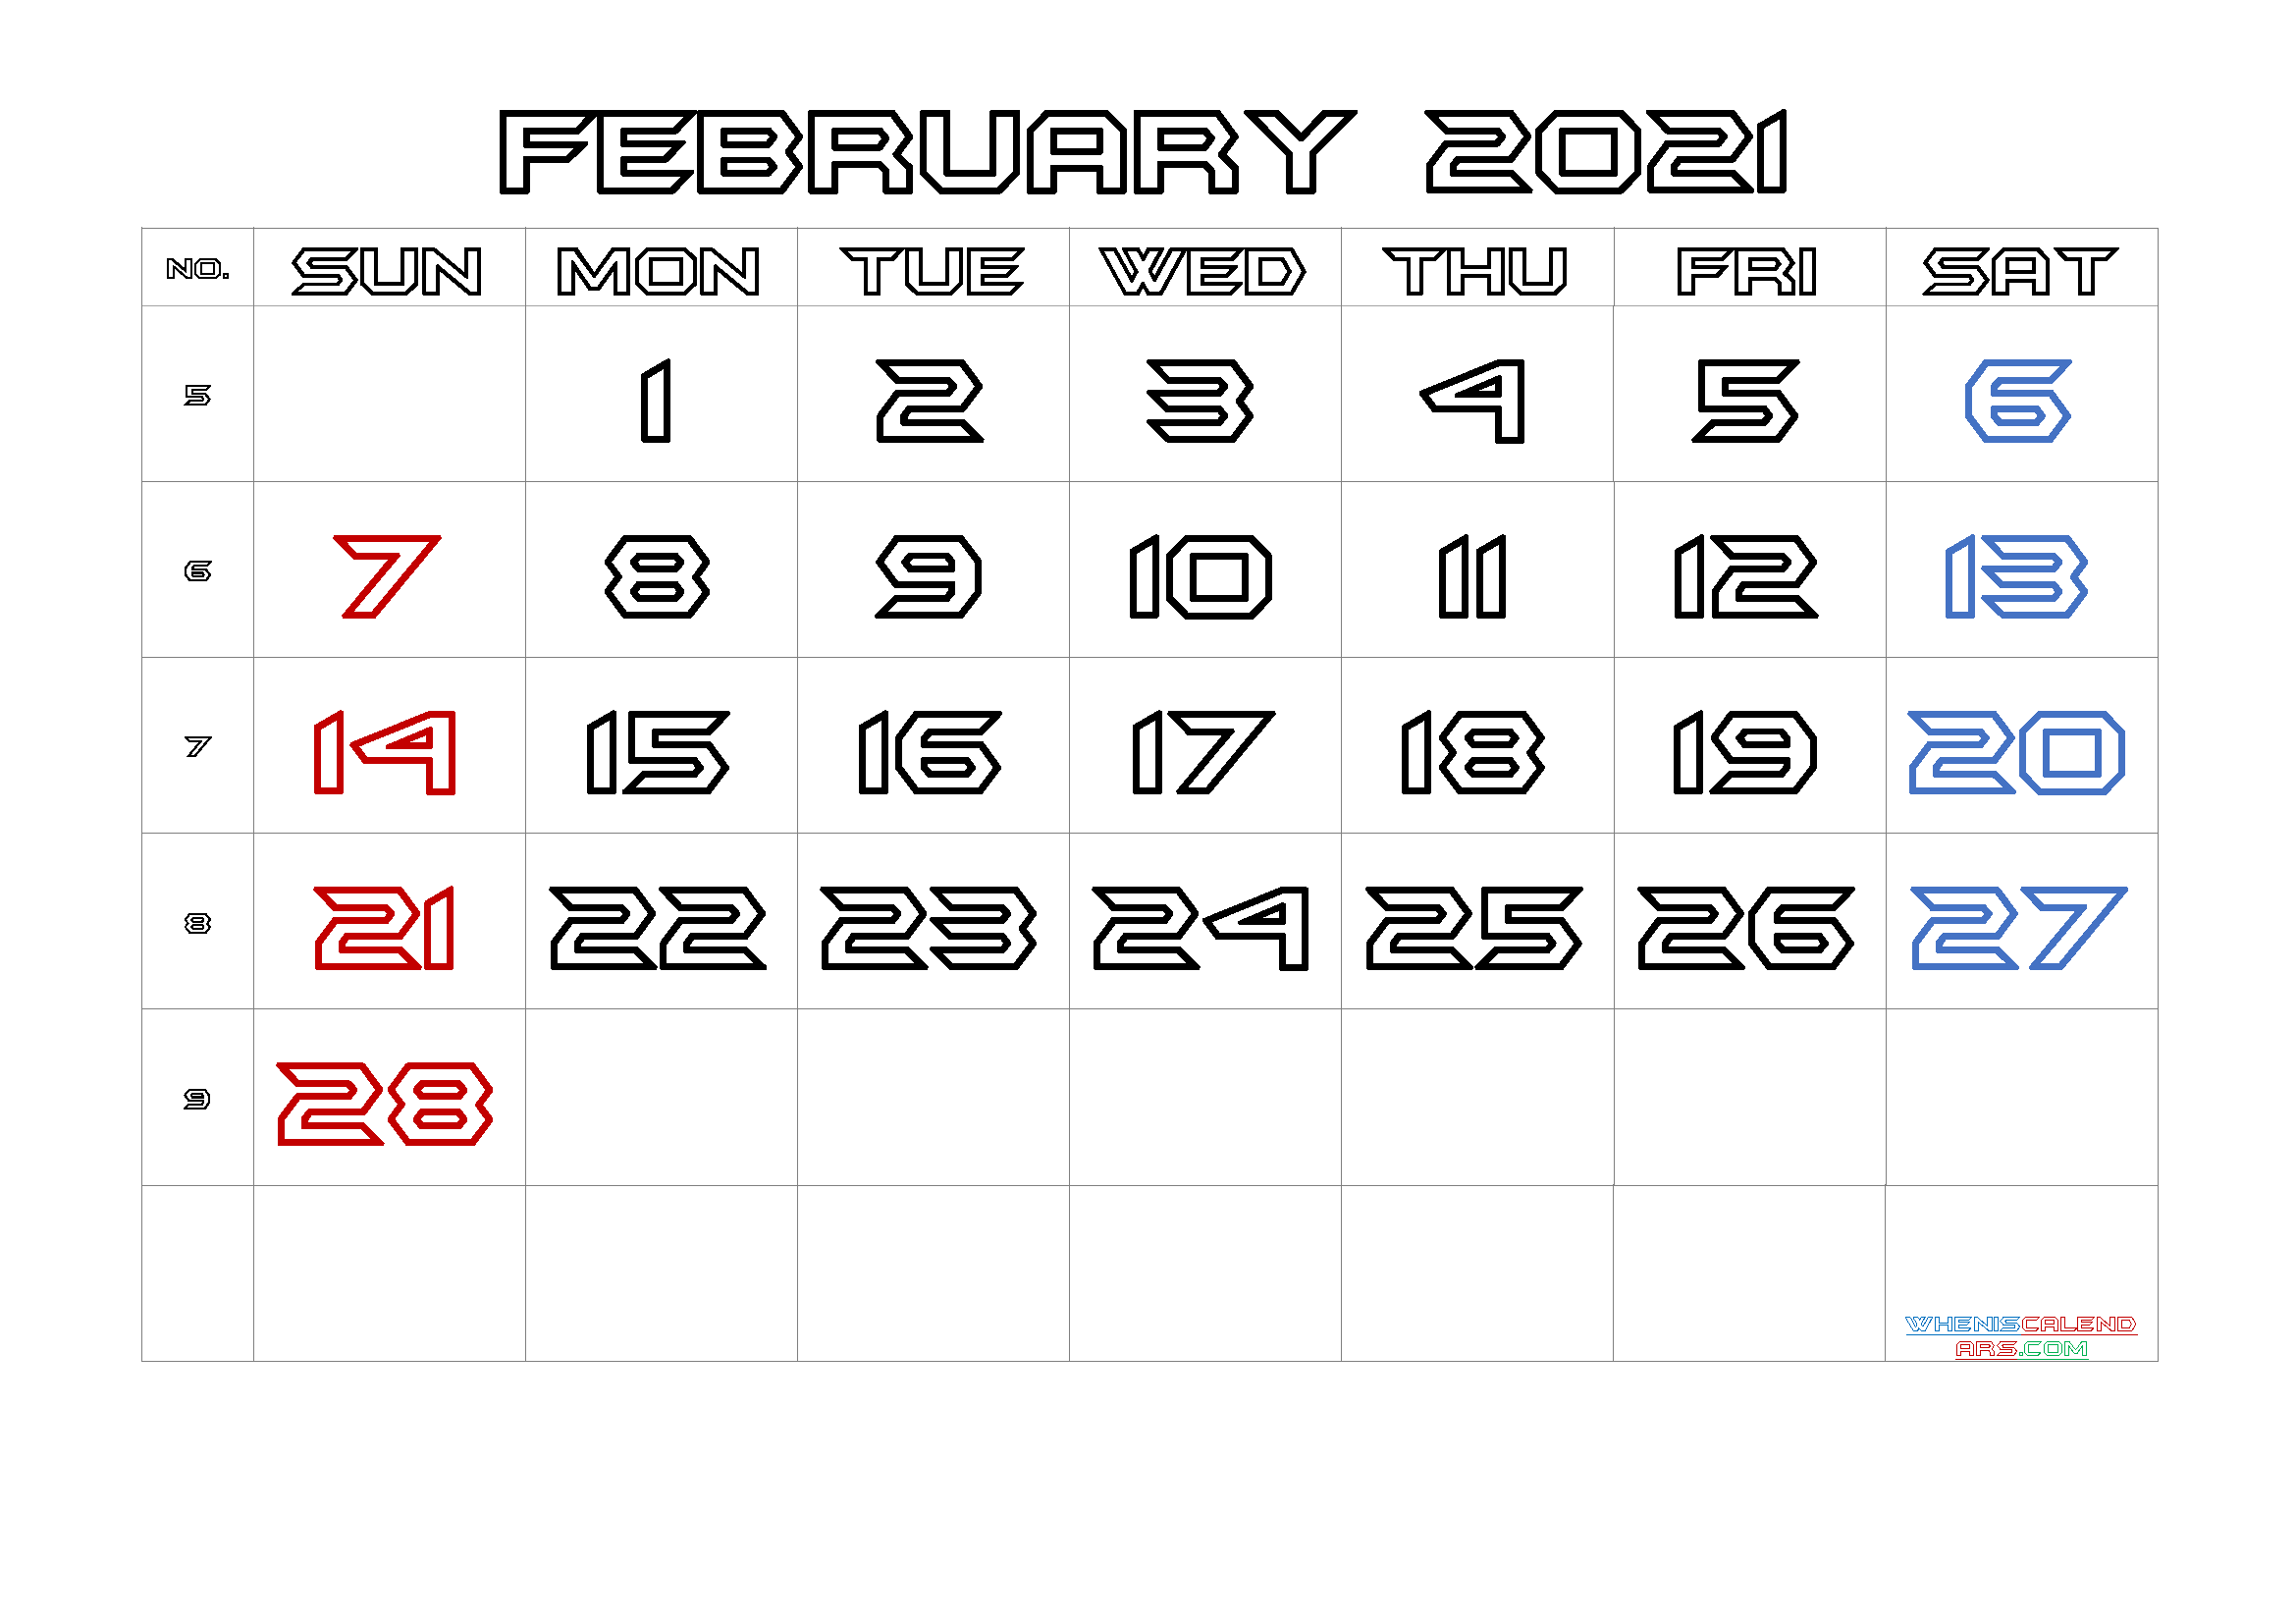 Printable Calendar February 2021 Free